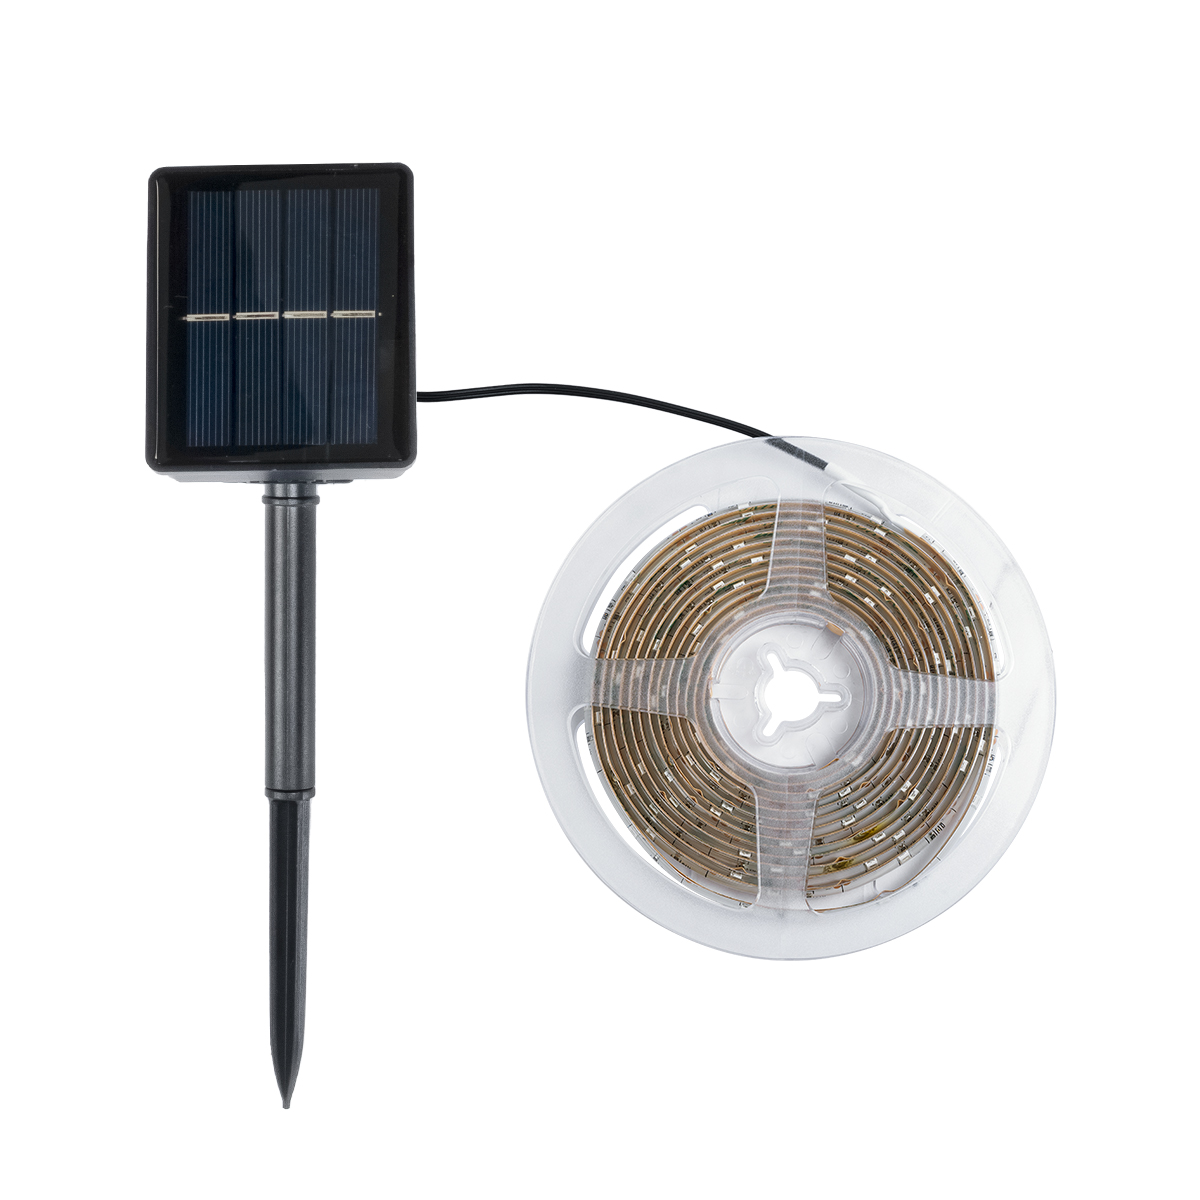 GloboStar® SOLAR LEDSTRIP 70421 Αυτόνομο Ηλιακό Σετ Ταινία LED 3m 3W/3m 90LED 2835 SMD 30lm/m 120° με Ενσωματωμένα Προγράμματα Λειτουργίας – Αδιάβροχο IP65 – RGB – Μ300 x Π0.8 x Υ0.3cm – 2 Χρόνια Εγγύηση